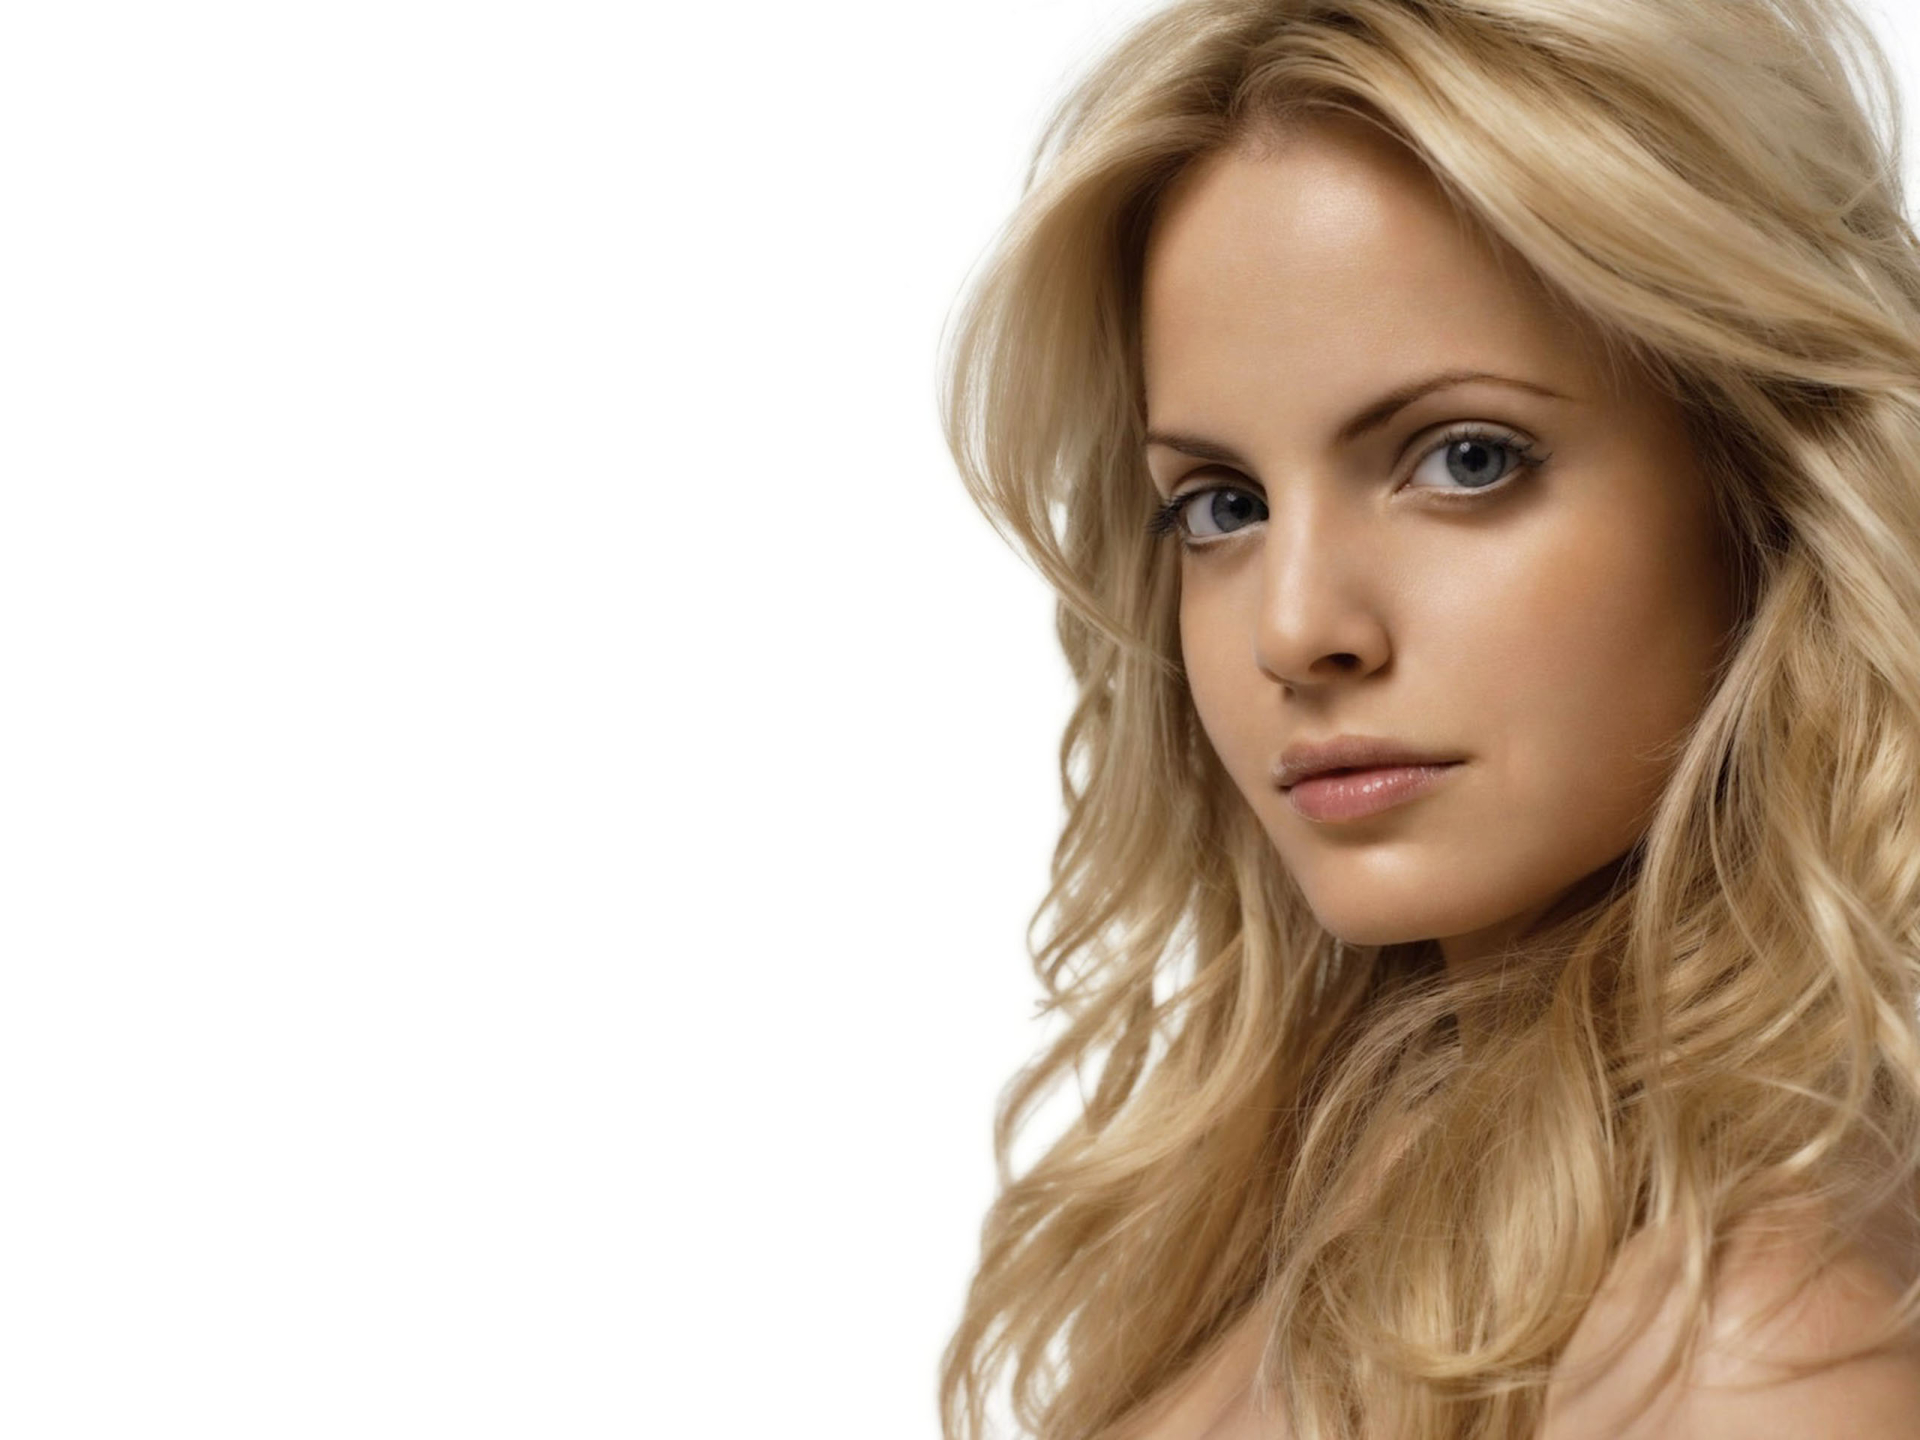 Mena Suvari, blonde celebrity with striking blue eyes, posing for a captivating desktop wallpaper.